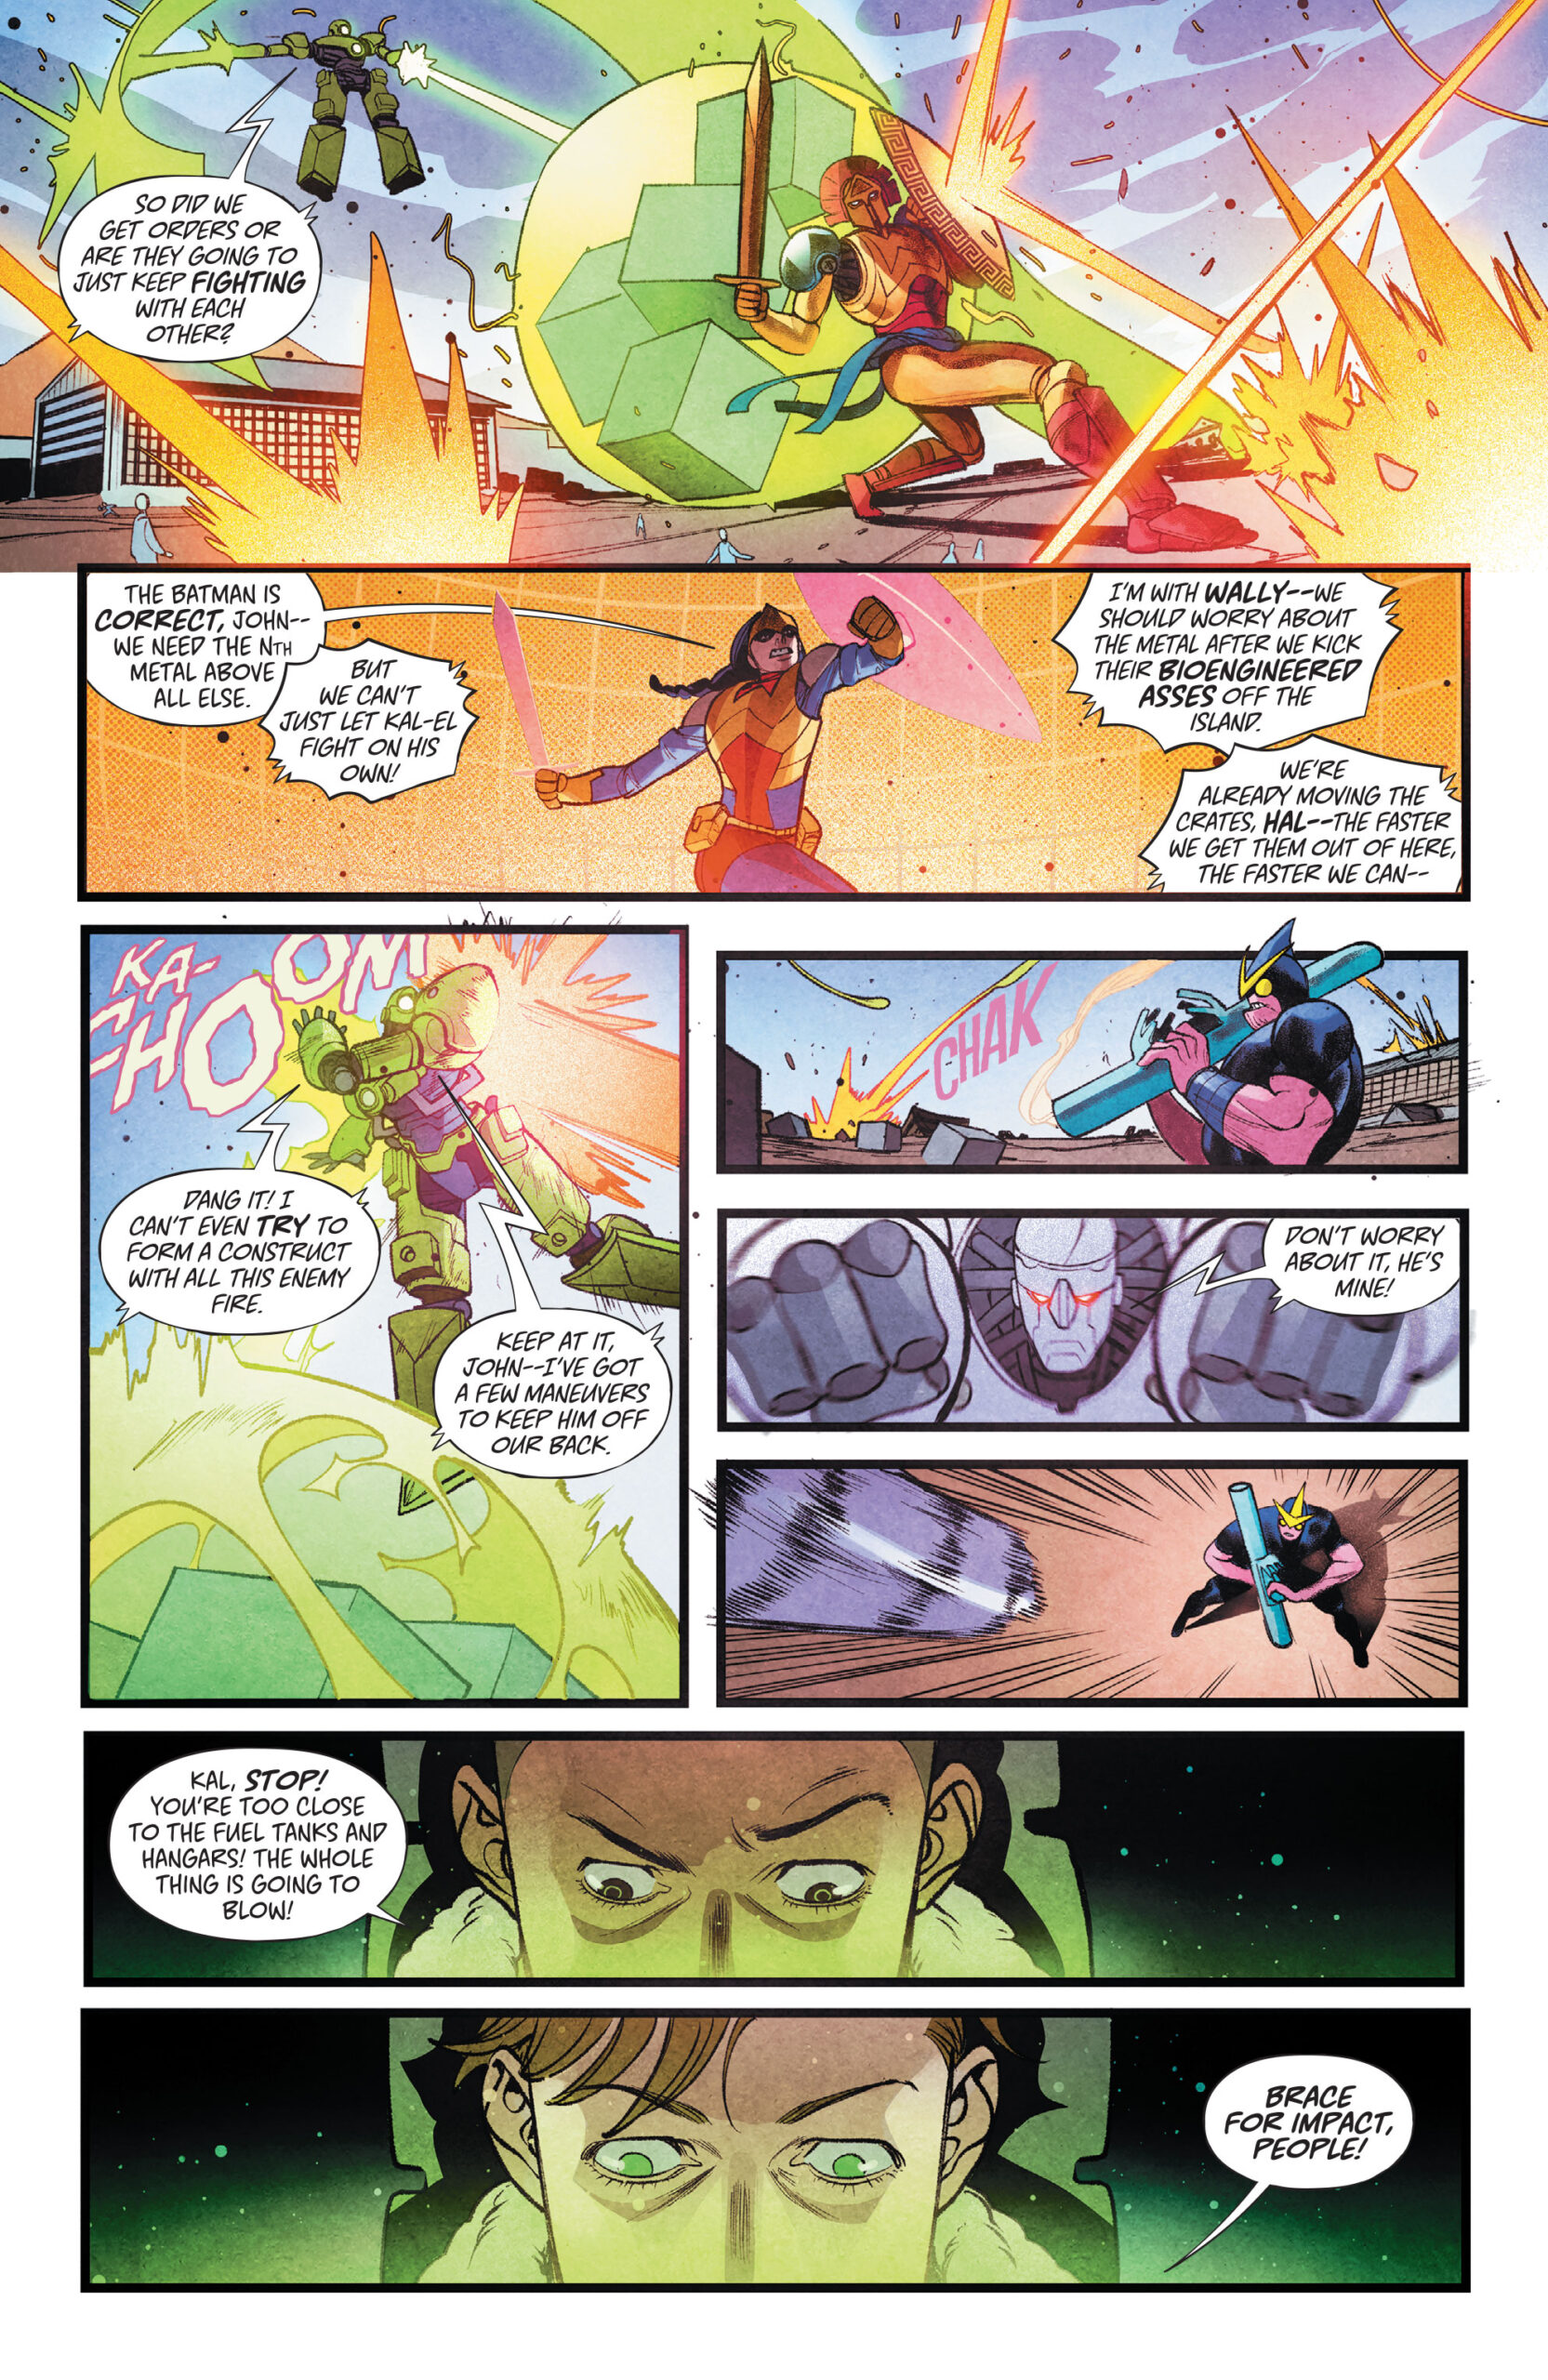 DC Mech #3 Preview | The Aspiring Kryptonian